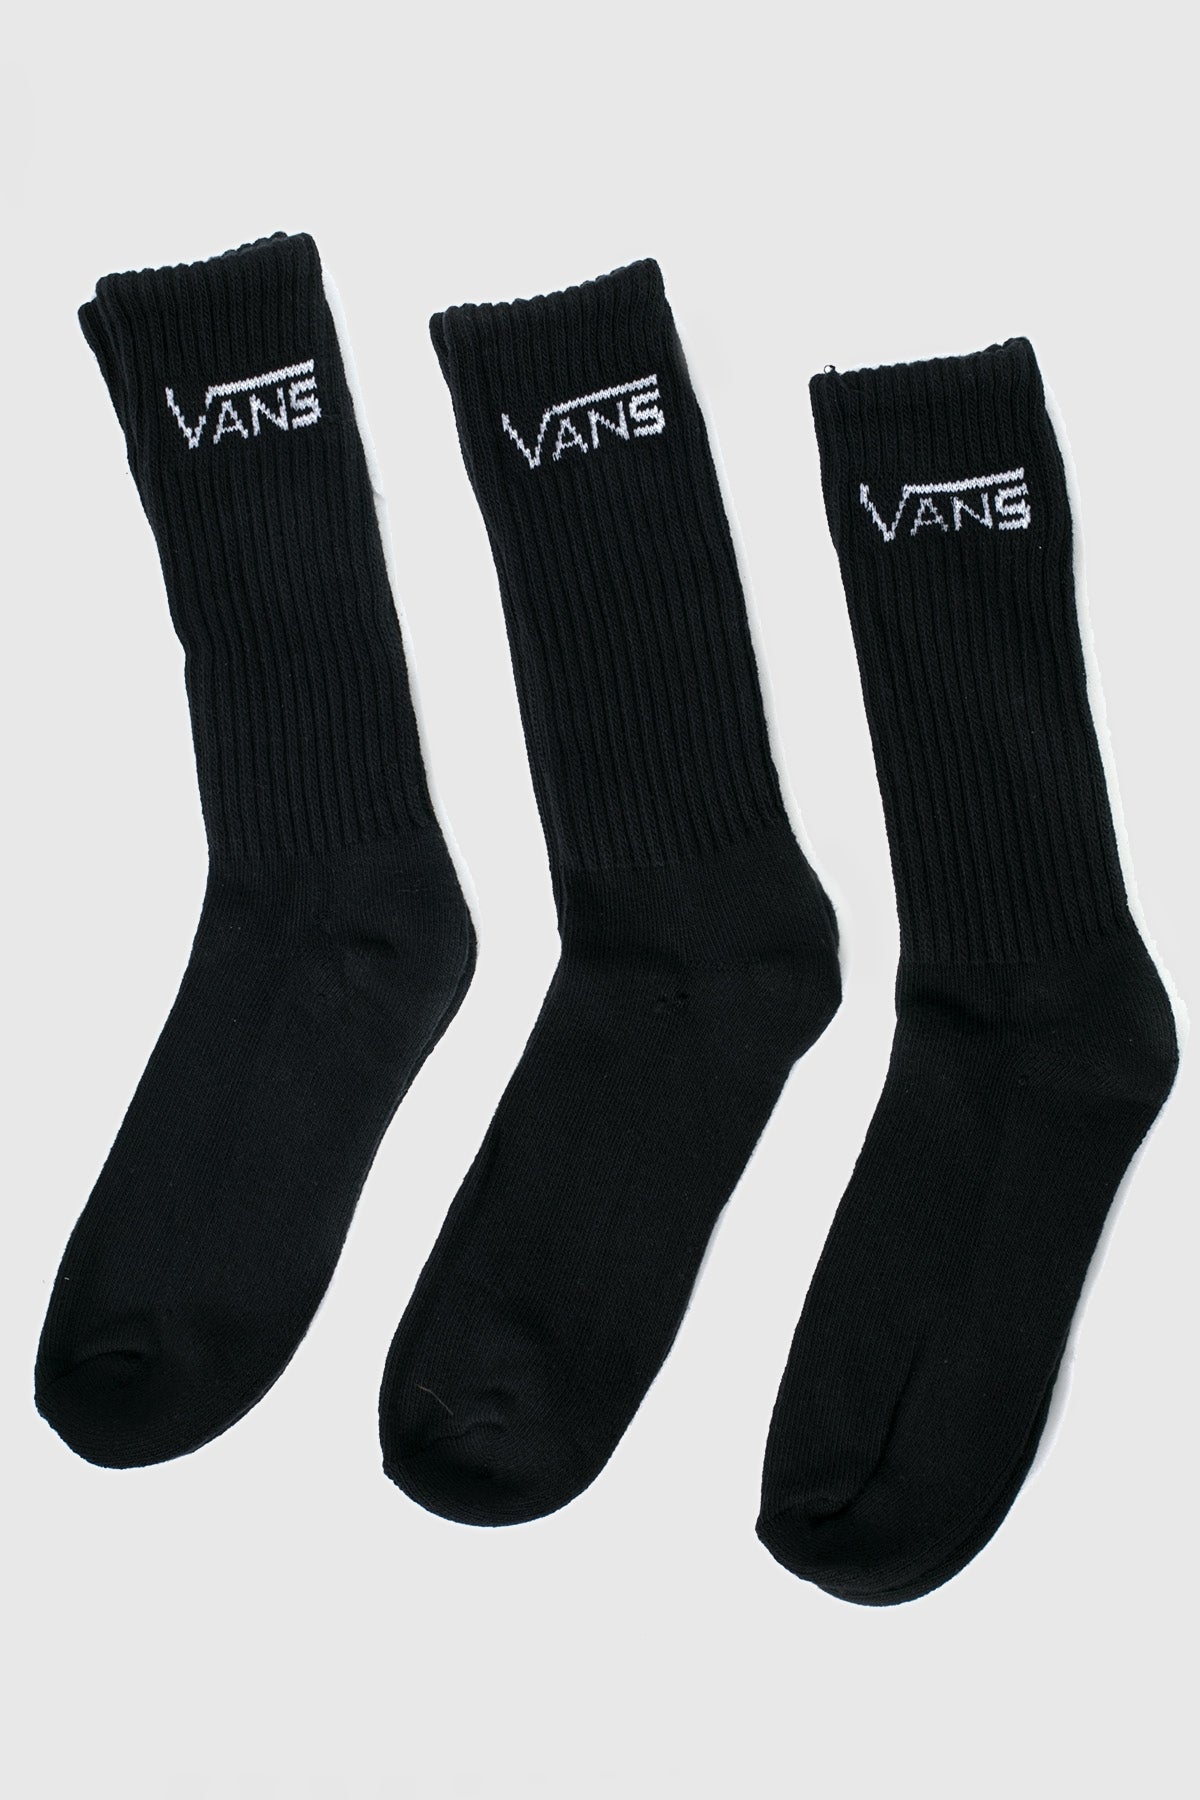 Vans Classic Crew Sock 3 Pack Black – Universal Store